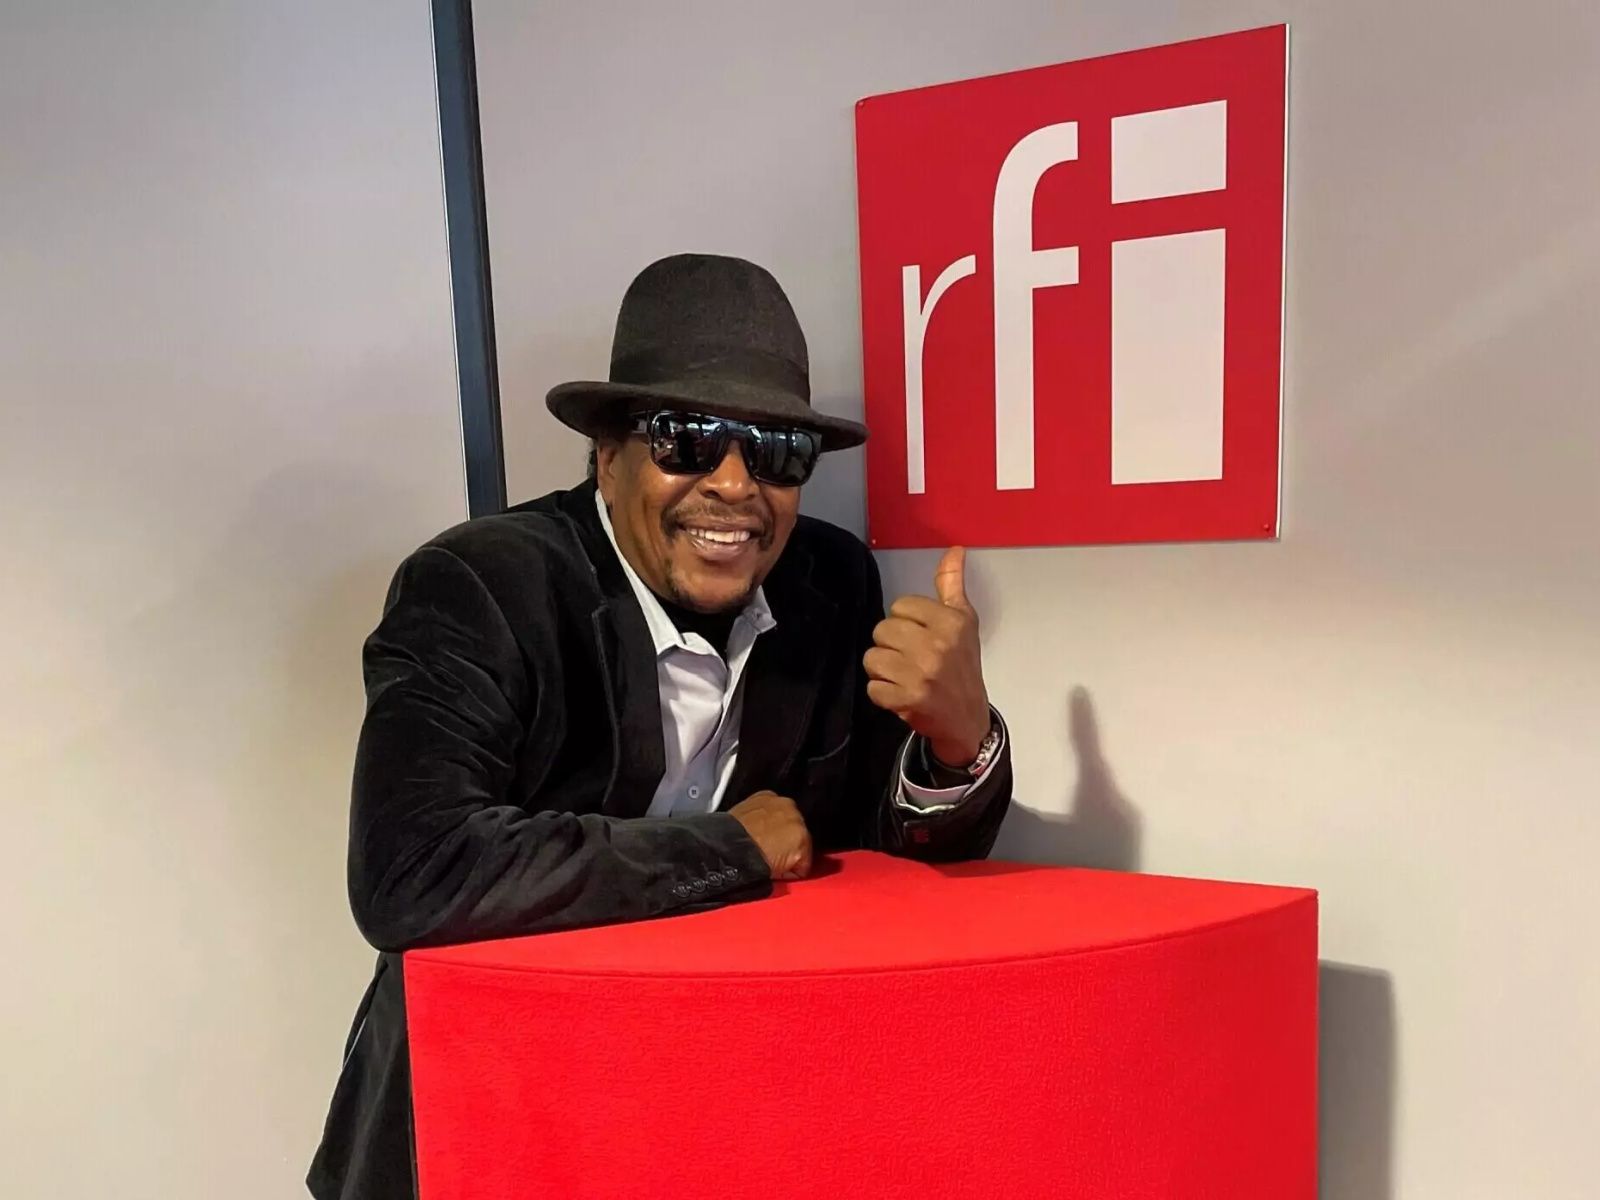 Boney Fields, Just Give Me Some Mo' - RFI Press Review with Joe Farmer